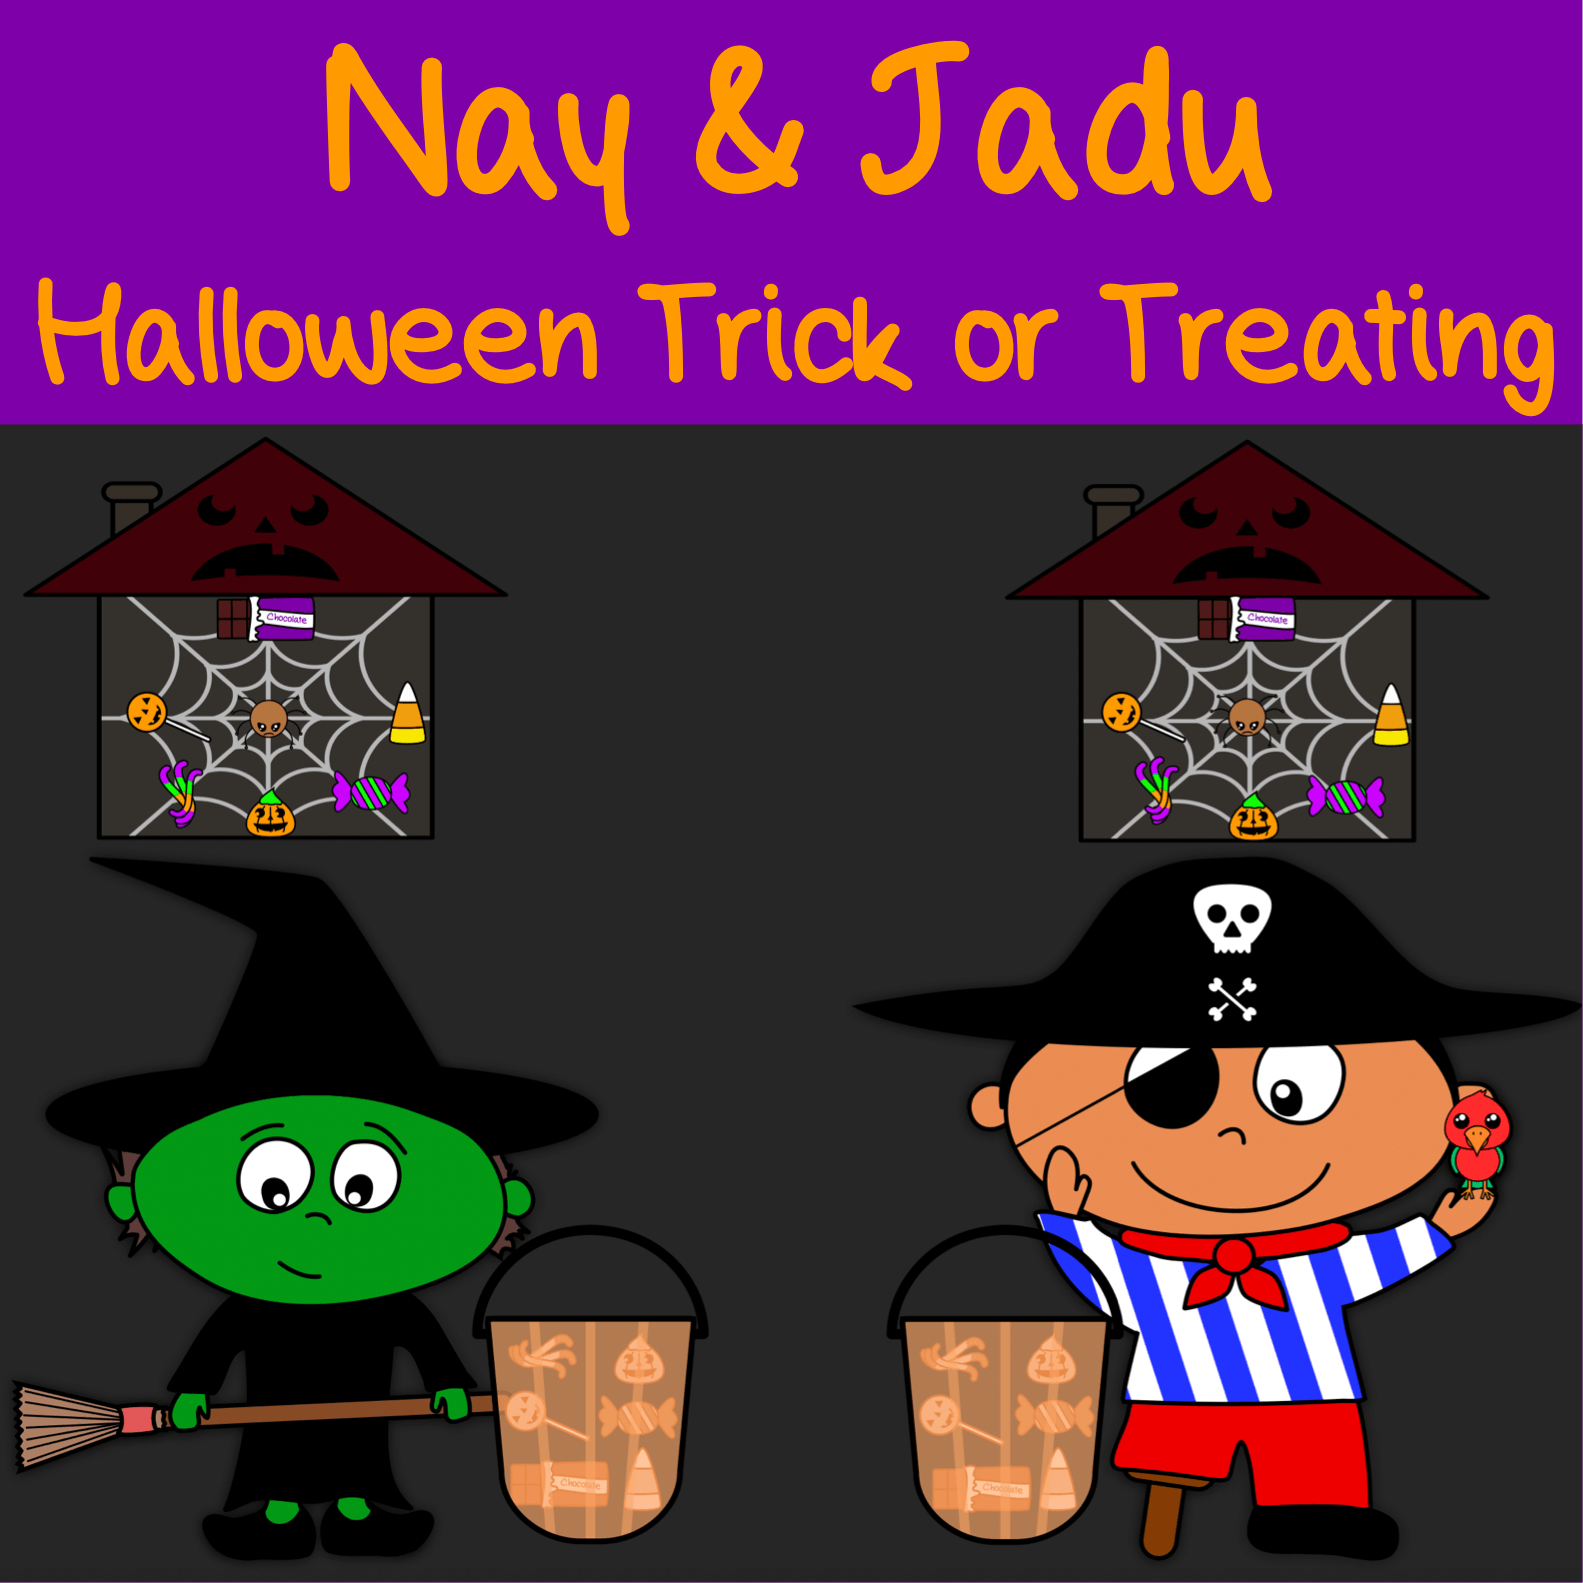 Nay and Jadu Trick or Treating